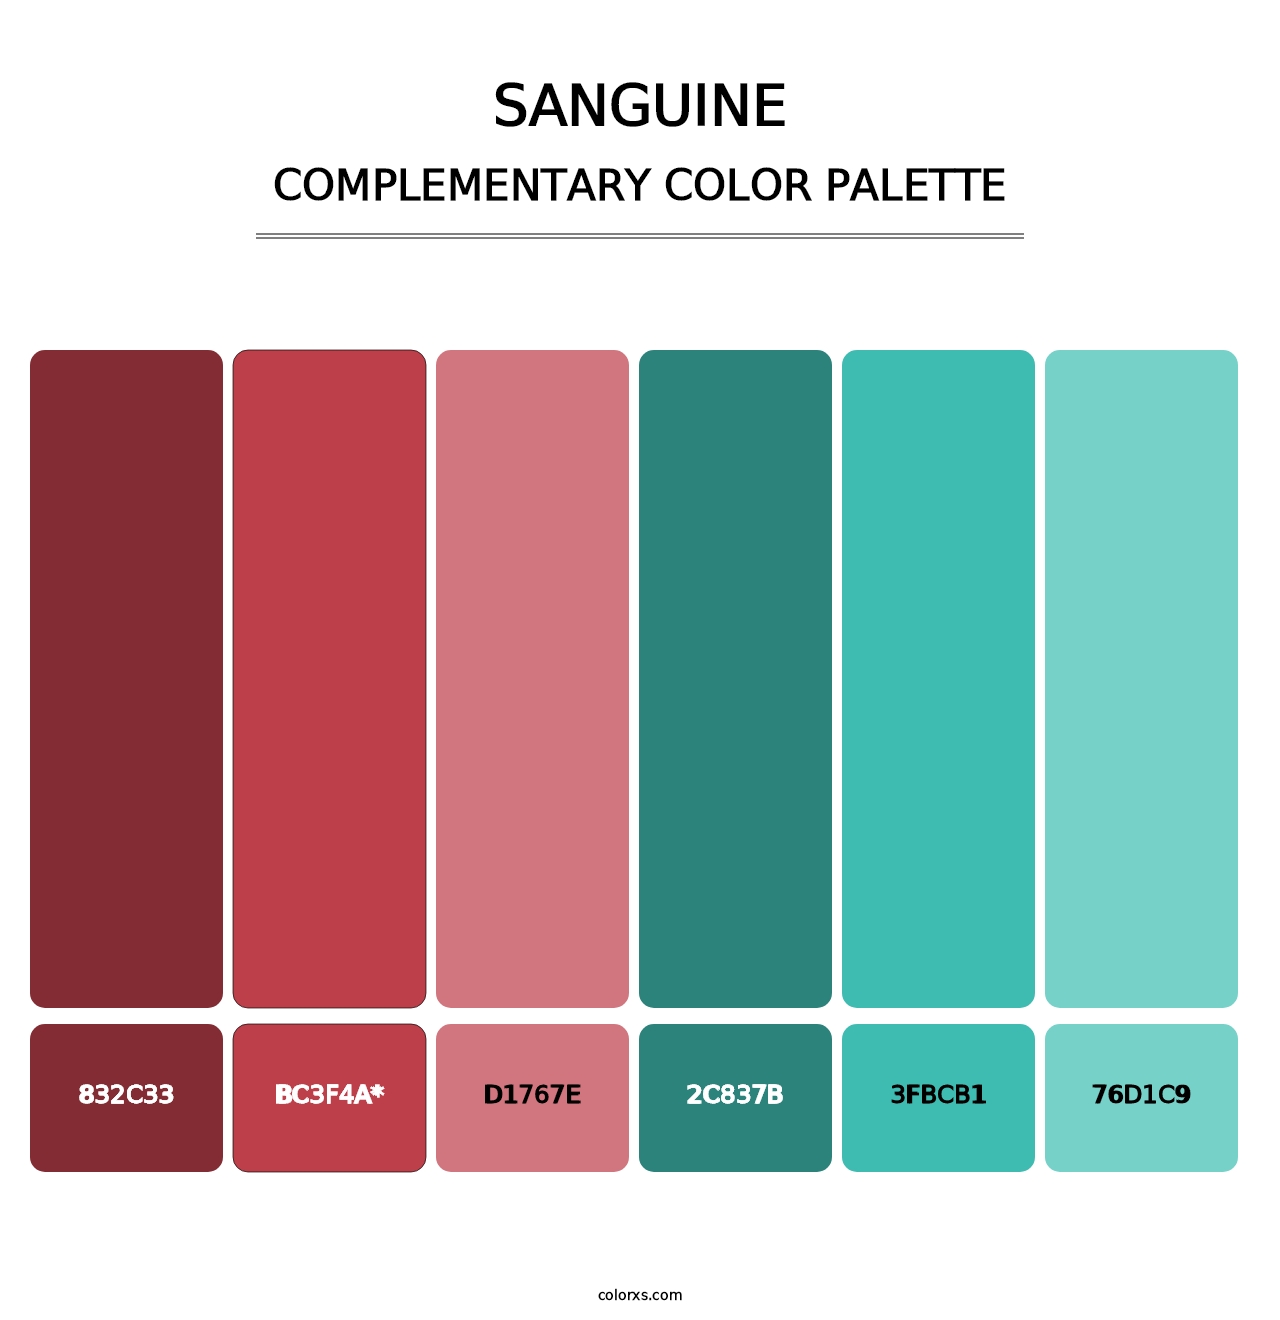 Sanguine - Complementary Color Palette